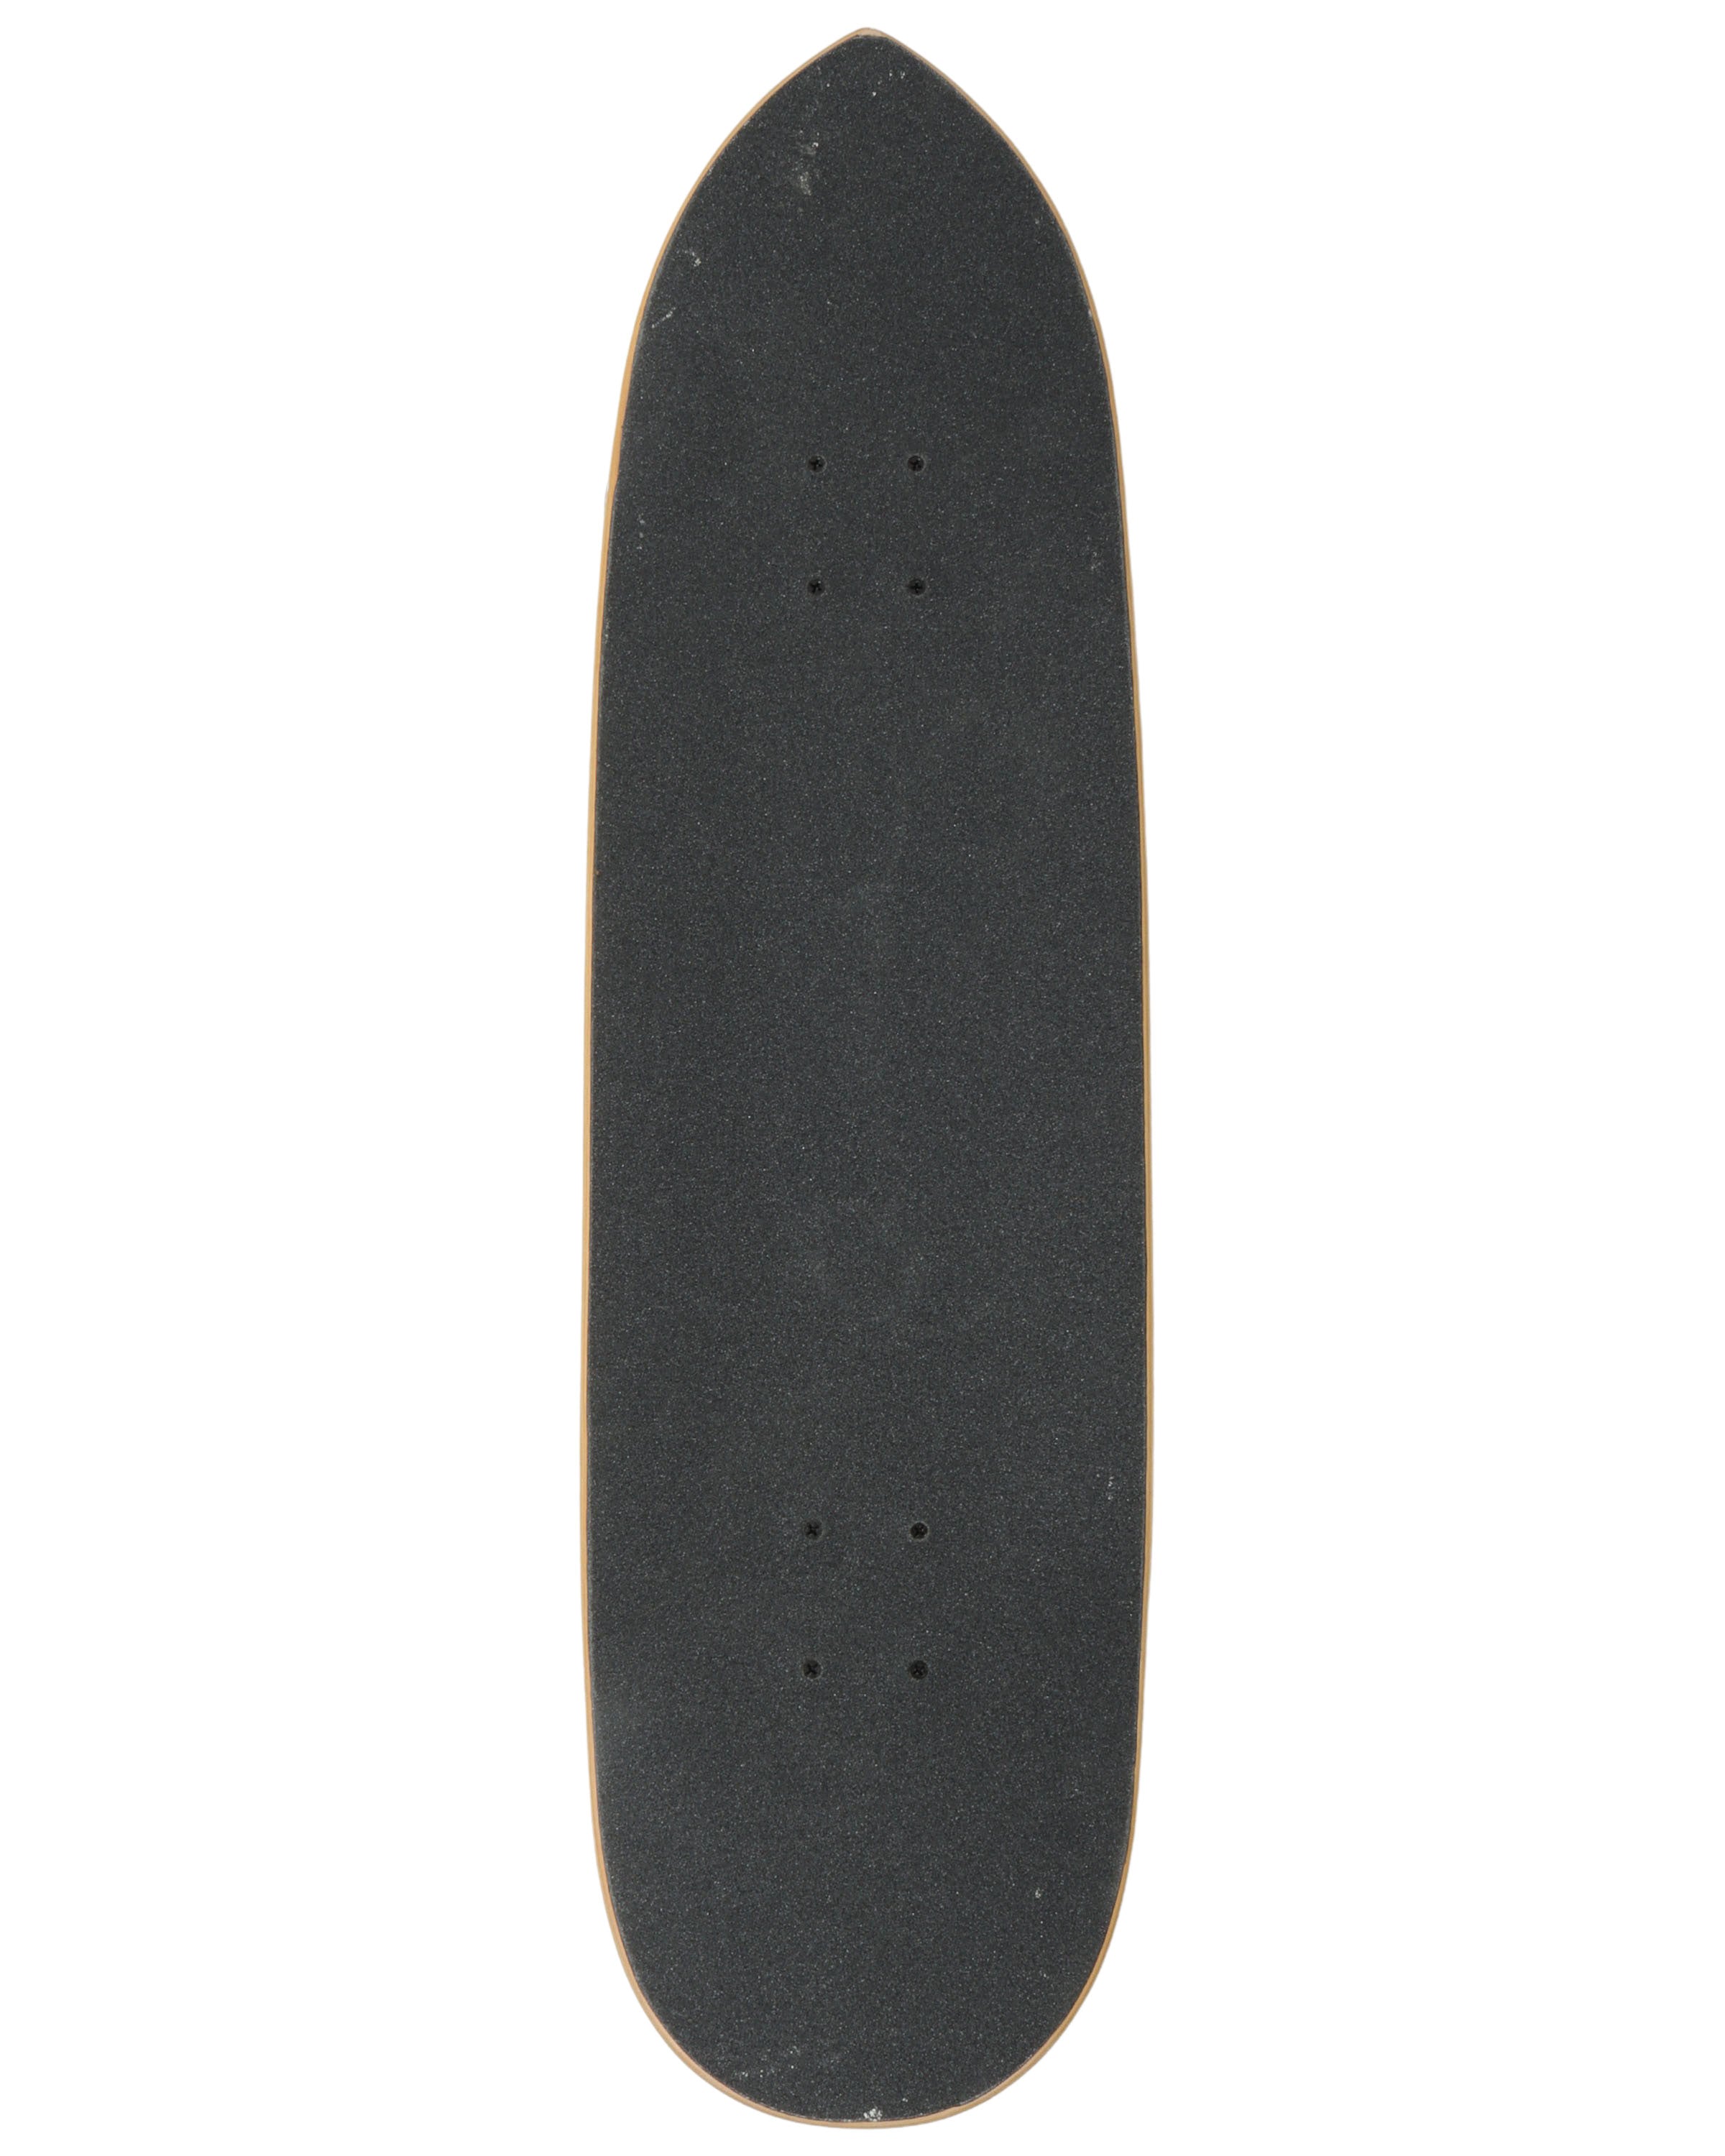 Saint Laurent Zebra Complete Skateboard